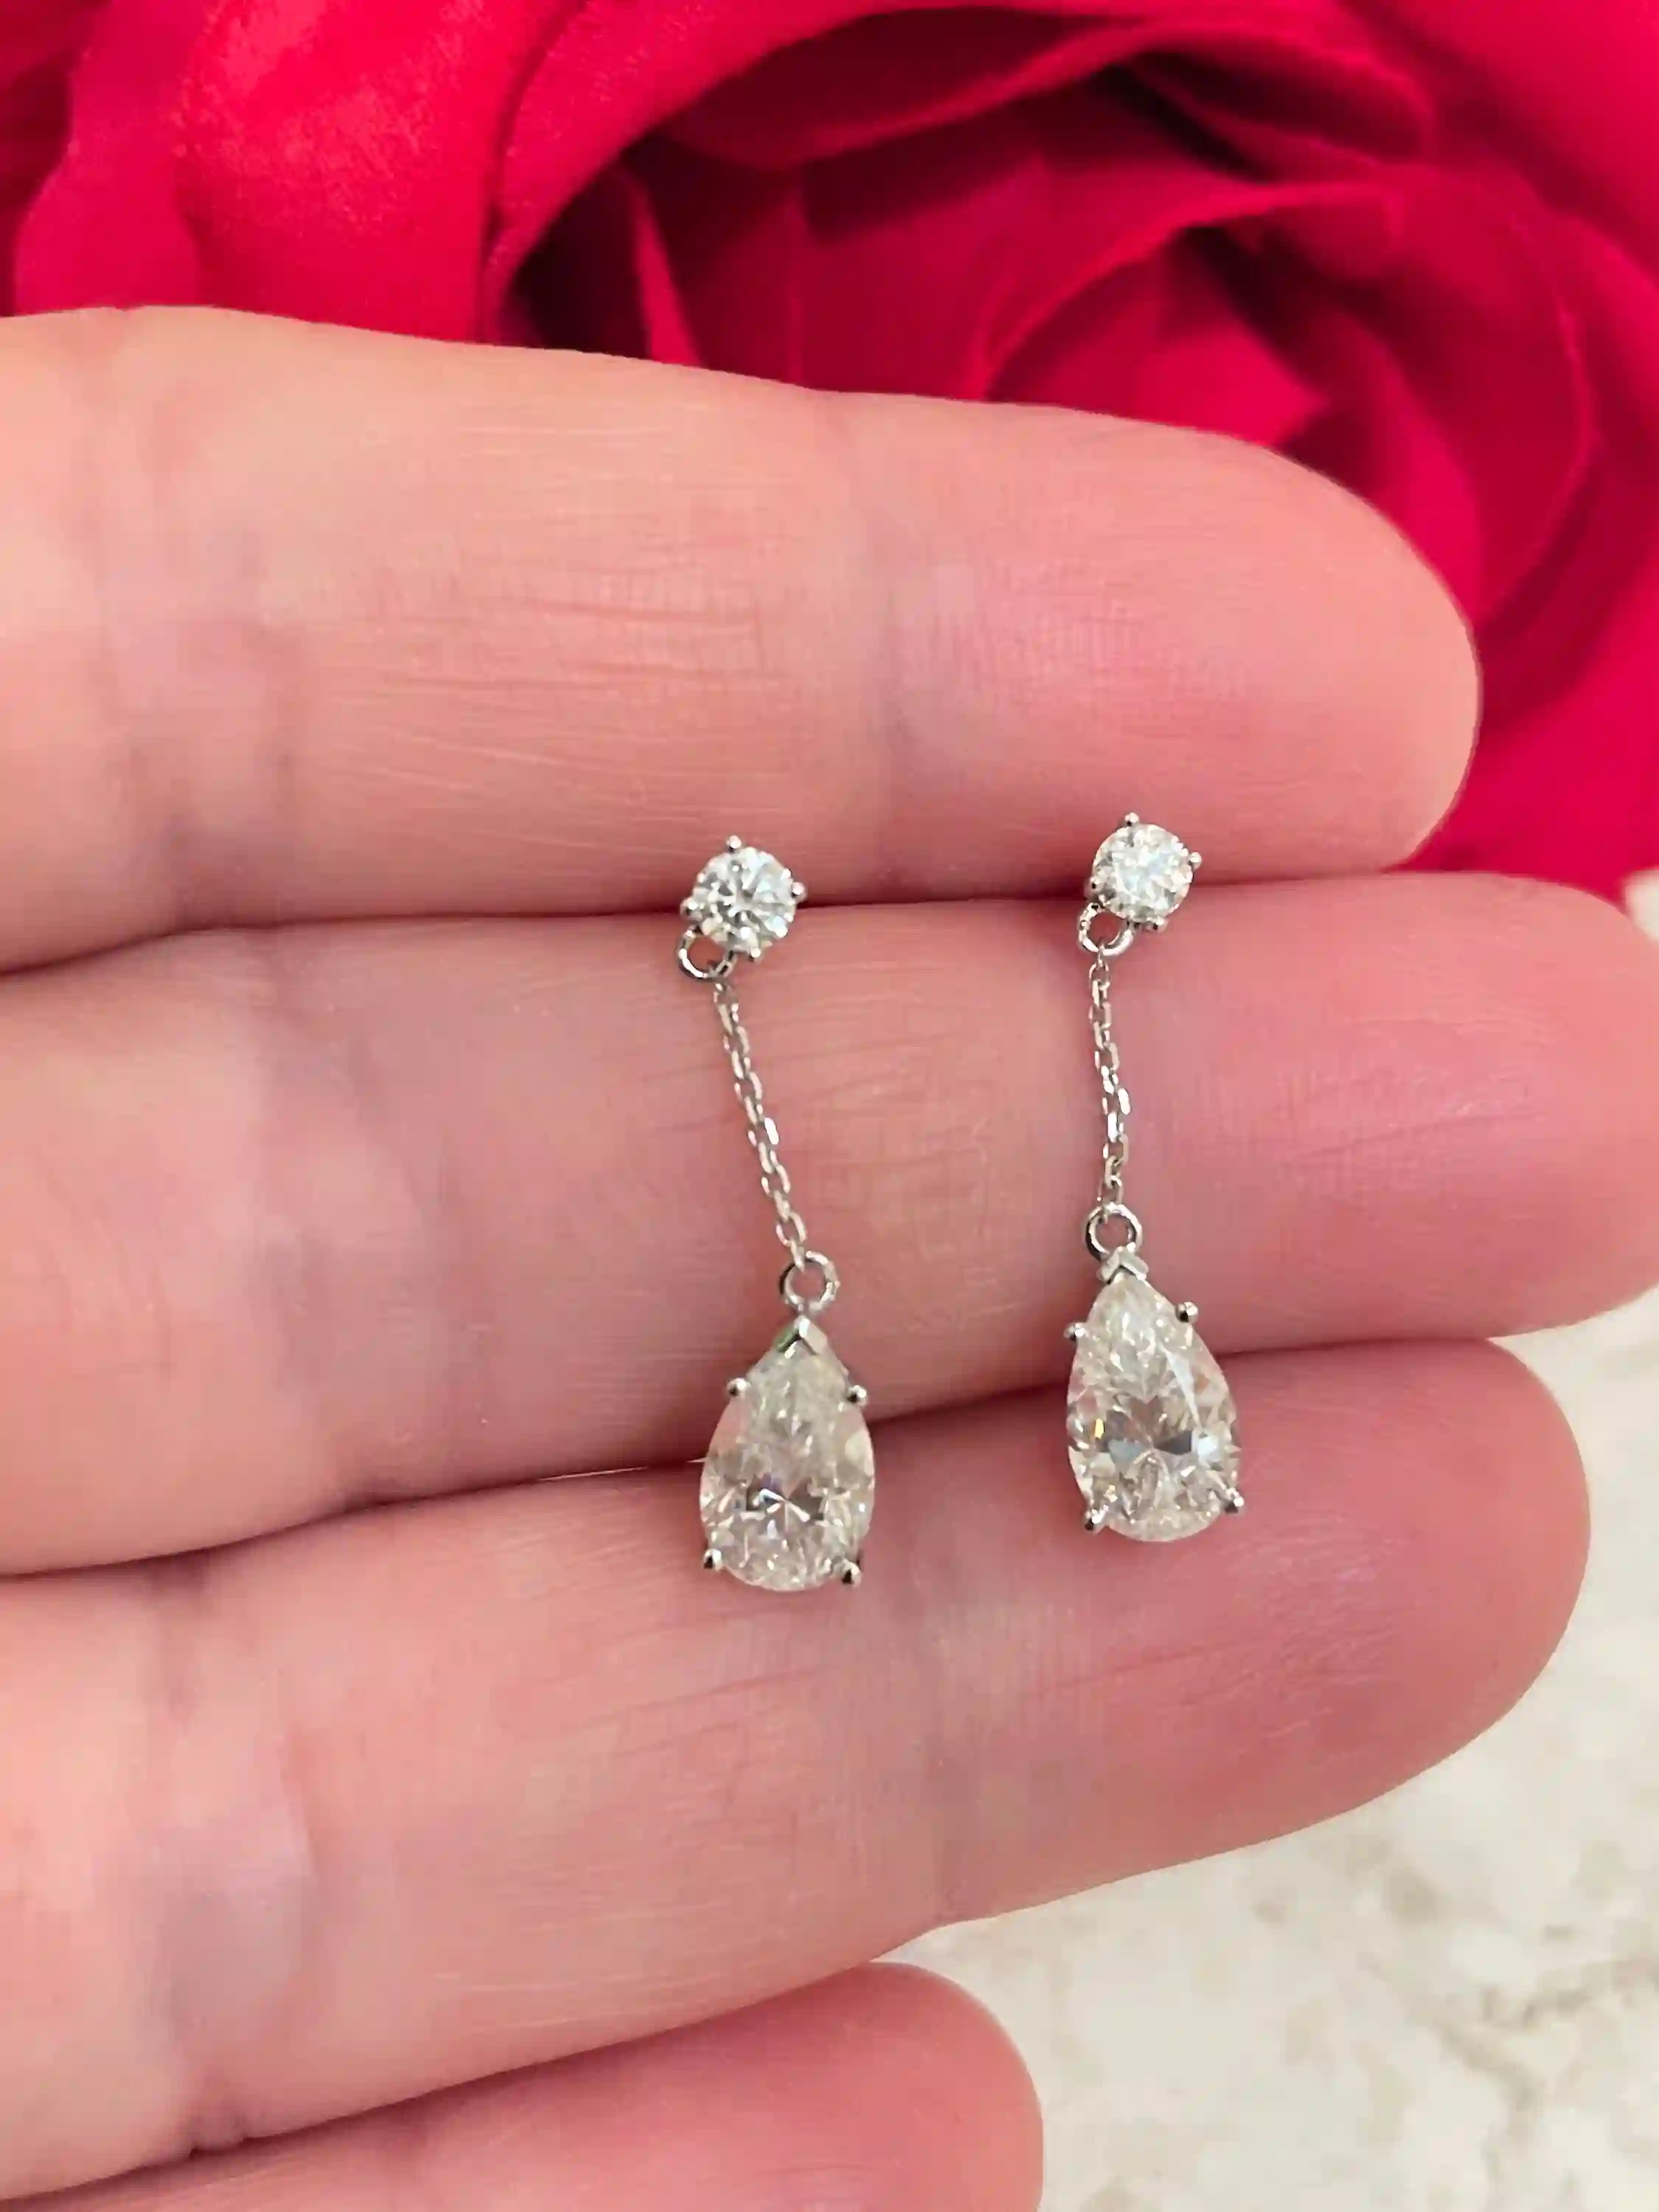 Solid Gold 18k Diamond Earrings Tear Drop Diamond Earrings Dangle Diamond Drop Earrings Daughter Bridal Shower Gift 2 ct Solitaire Diamond 